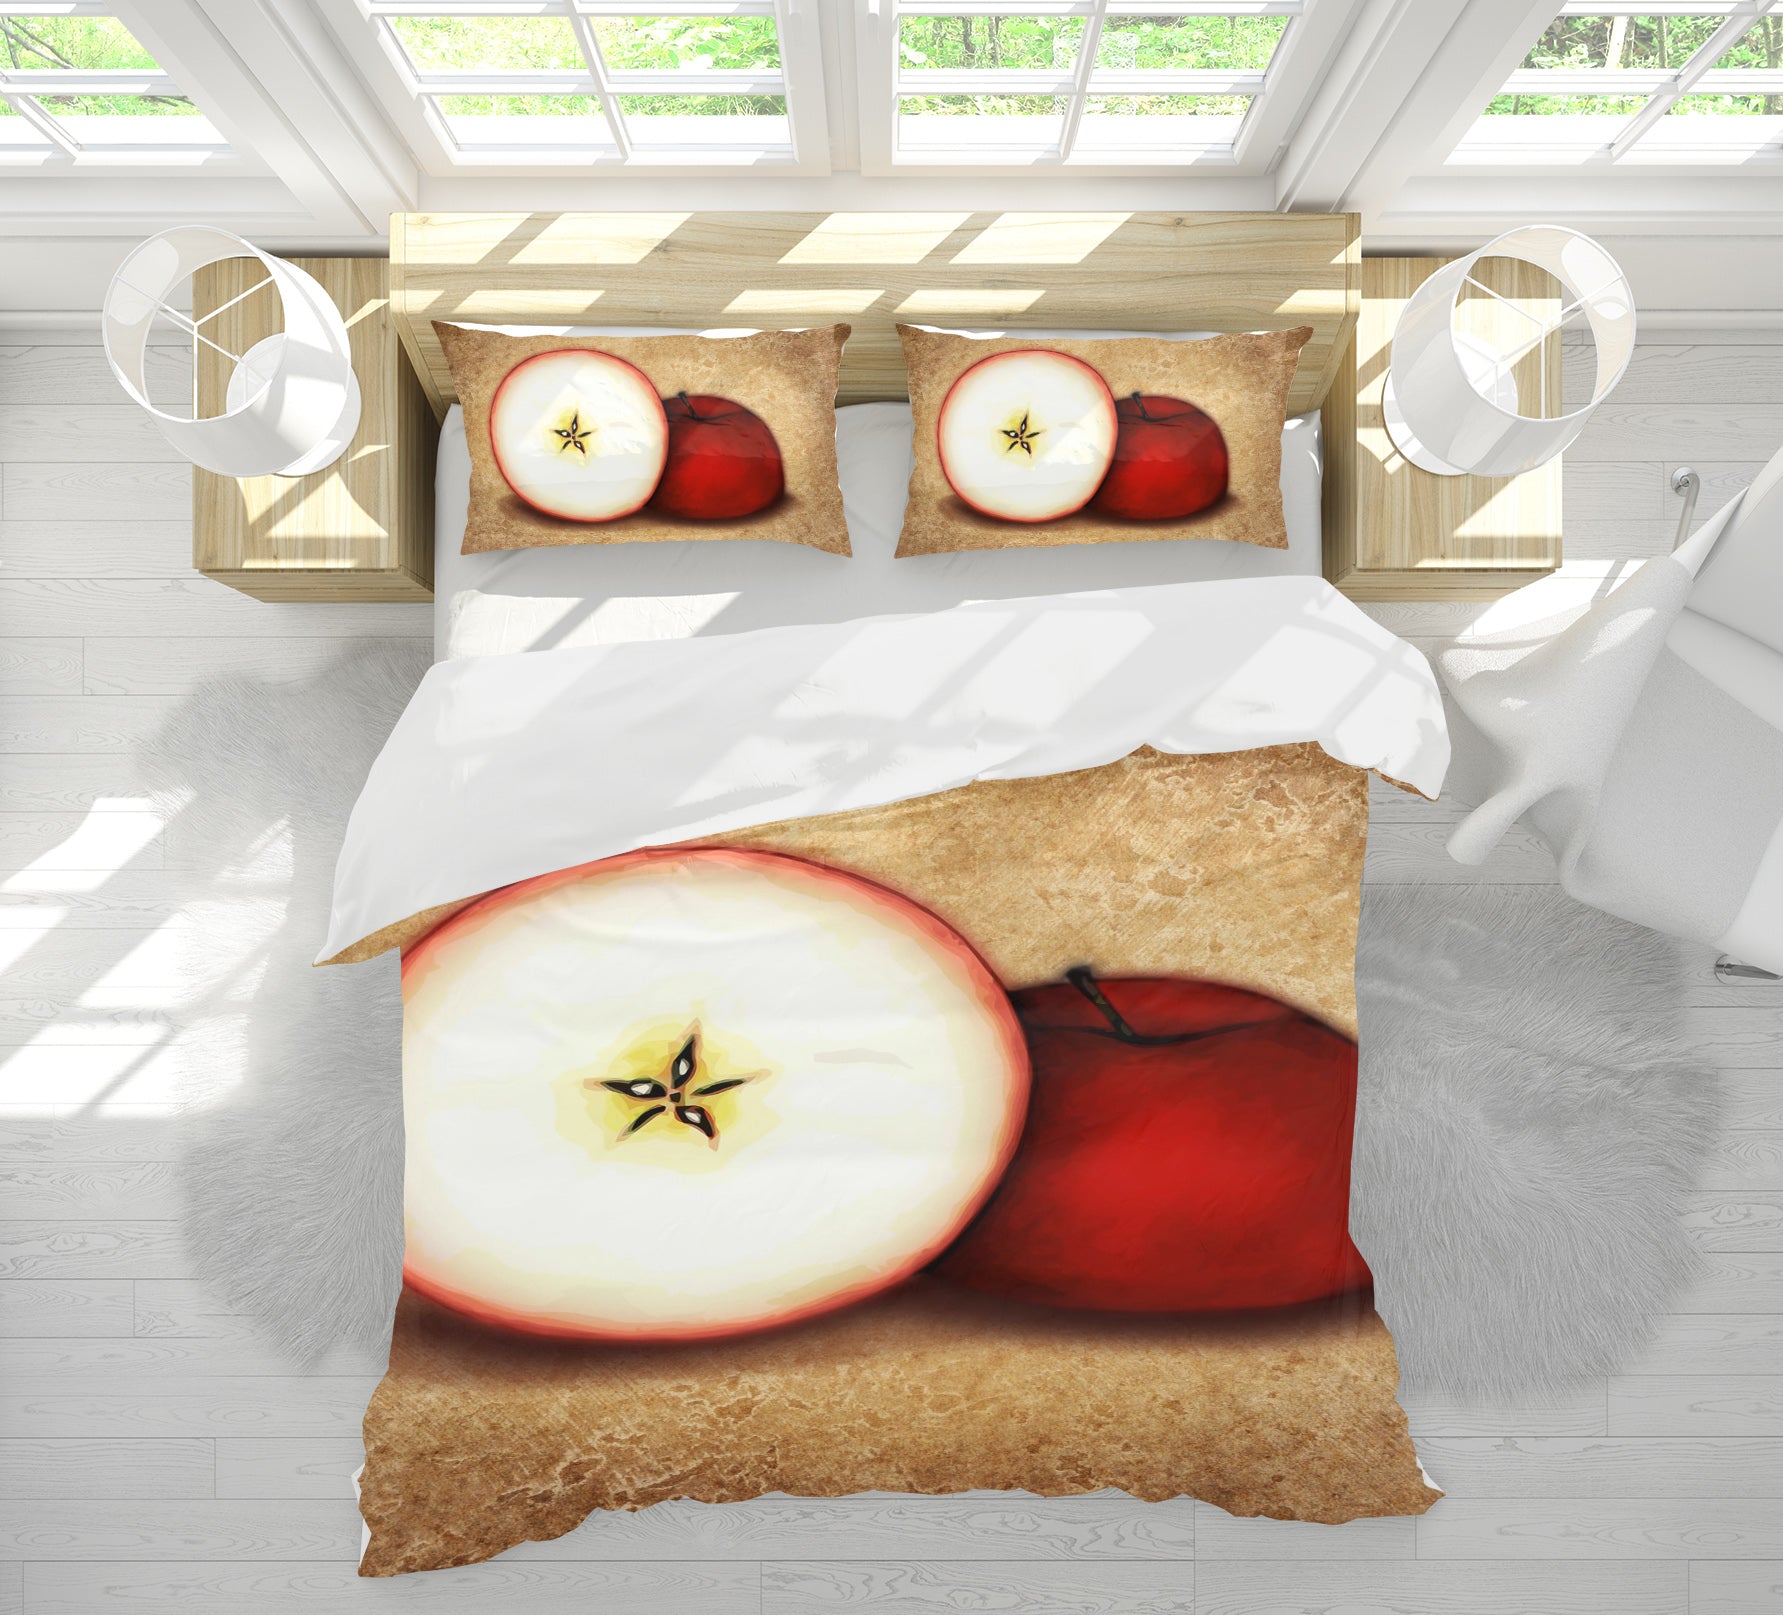 3D Red Apple 8855 Brigid Ashwood Bedding Bed Pillowcases Quilt Cover Duvet Cover